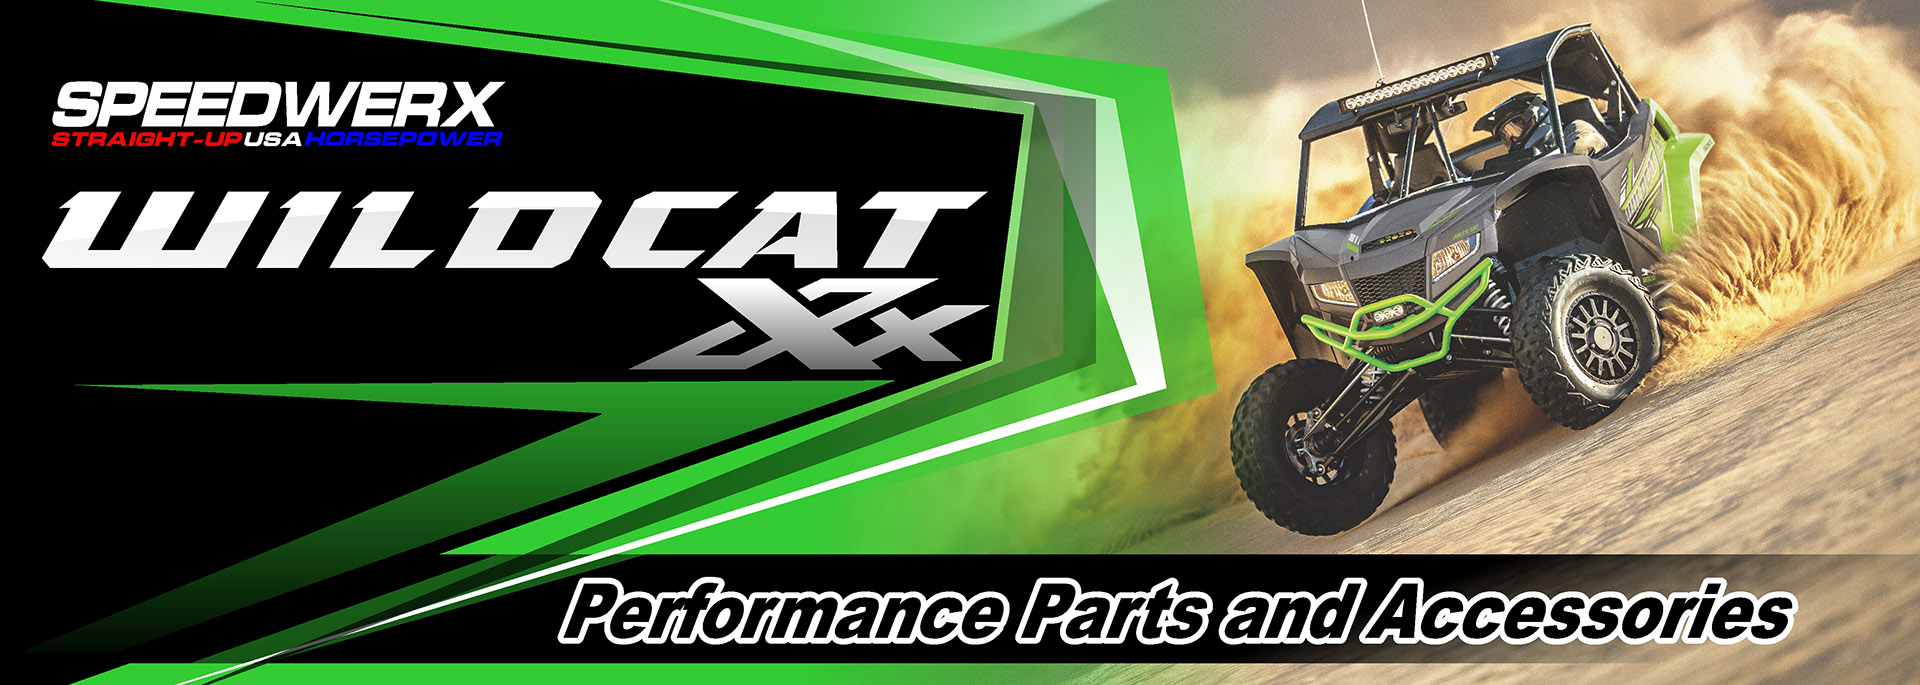 Arctic Cat Wildcat XX Performance Parts and Accessories